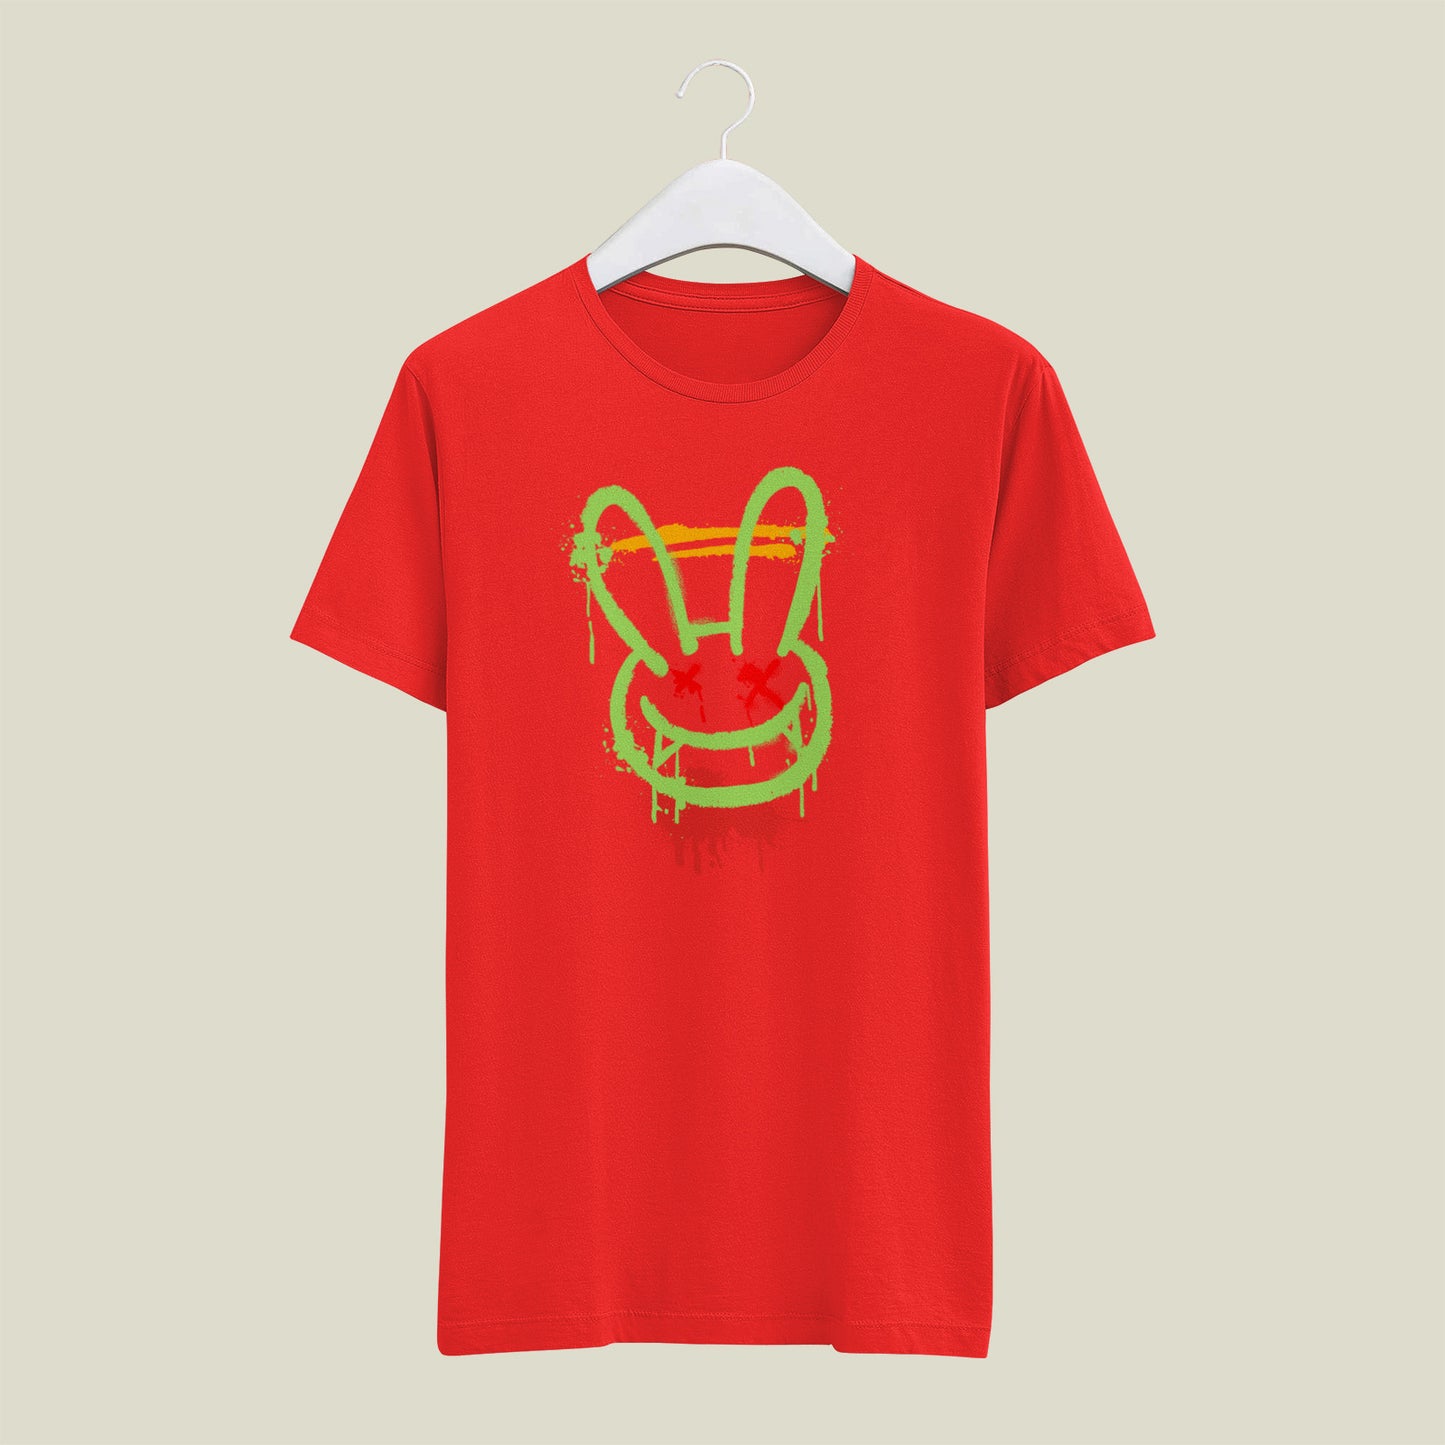 Rabbit Zodiac T-Shirt